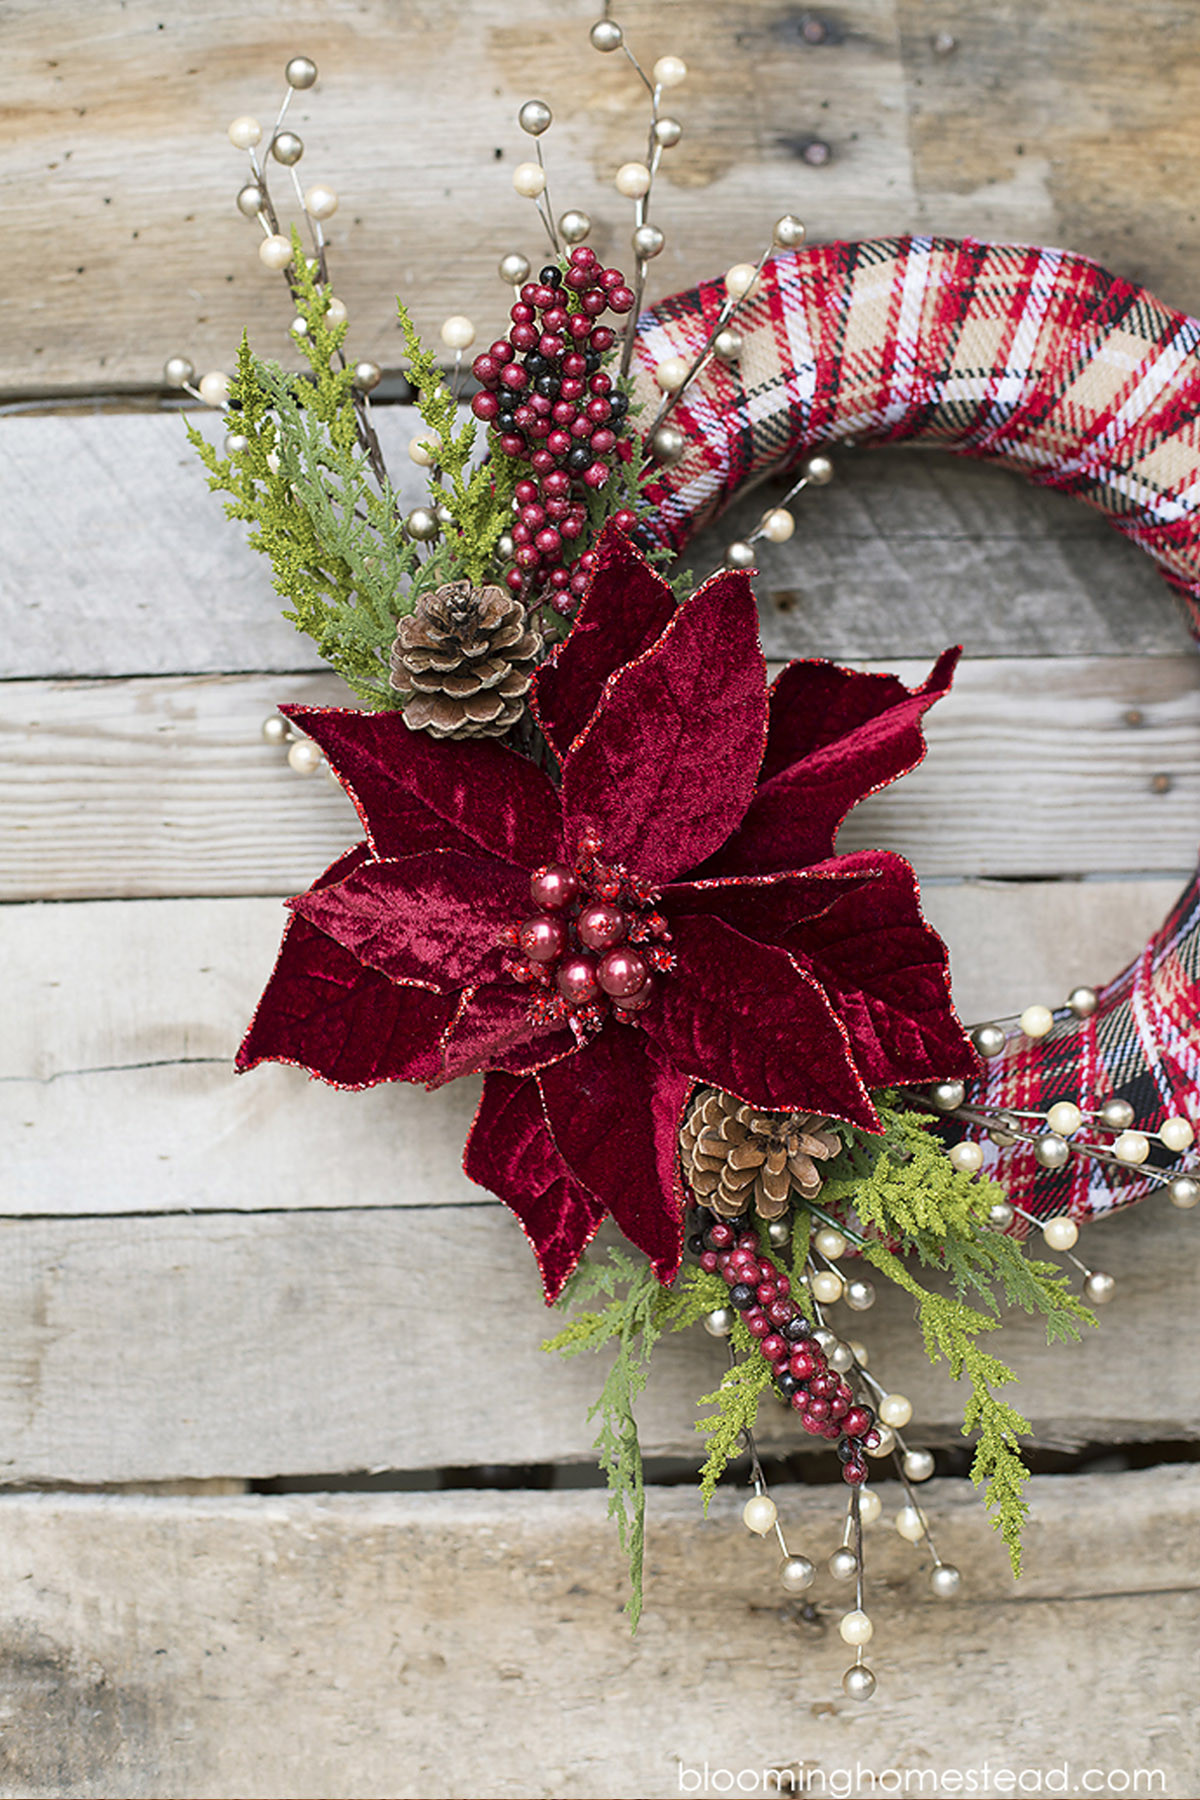 DIY Christmas Wreath Pinterest
 40 DIY Christmas Wreath Ideas How To Make a Homemade